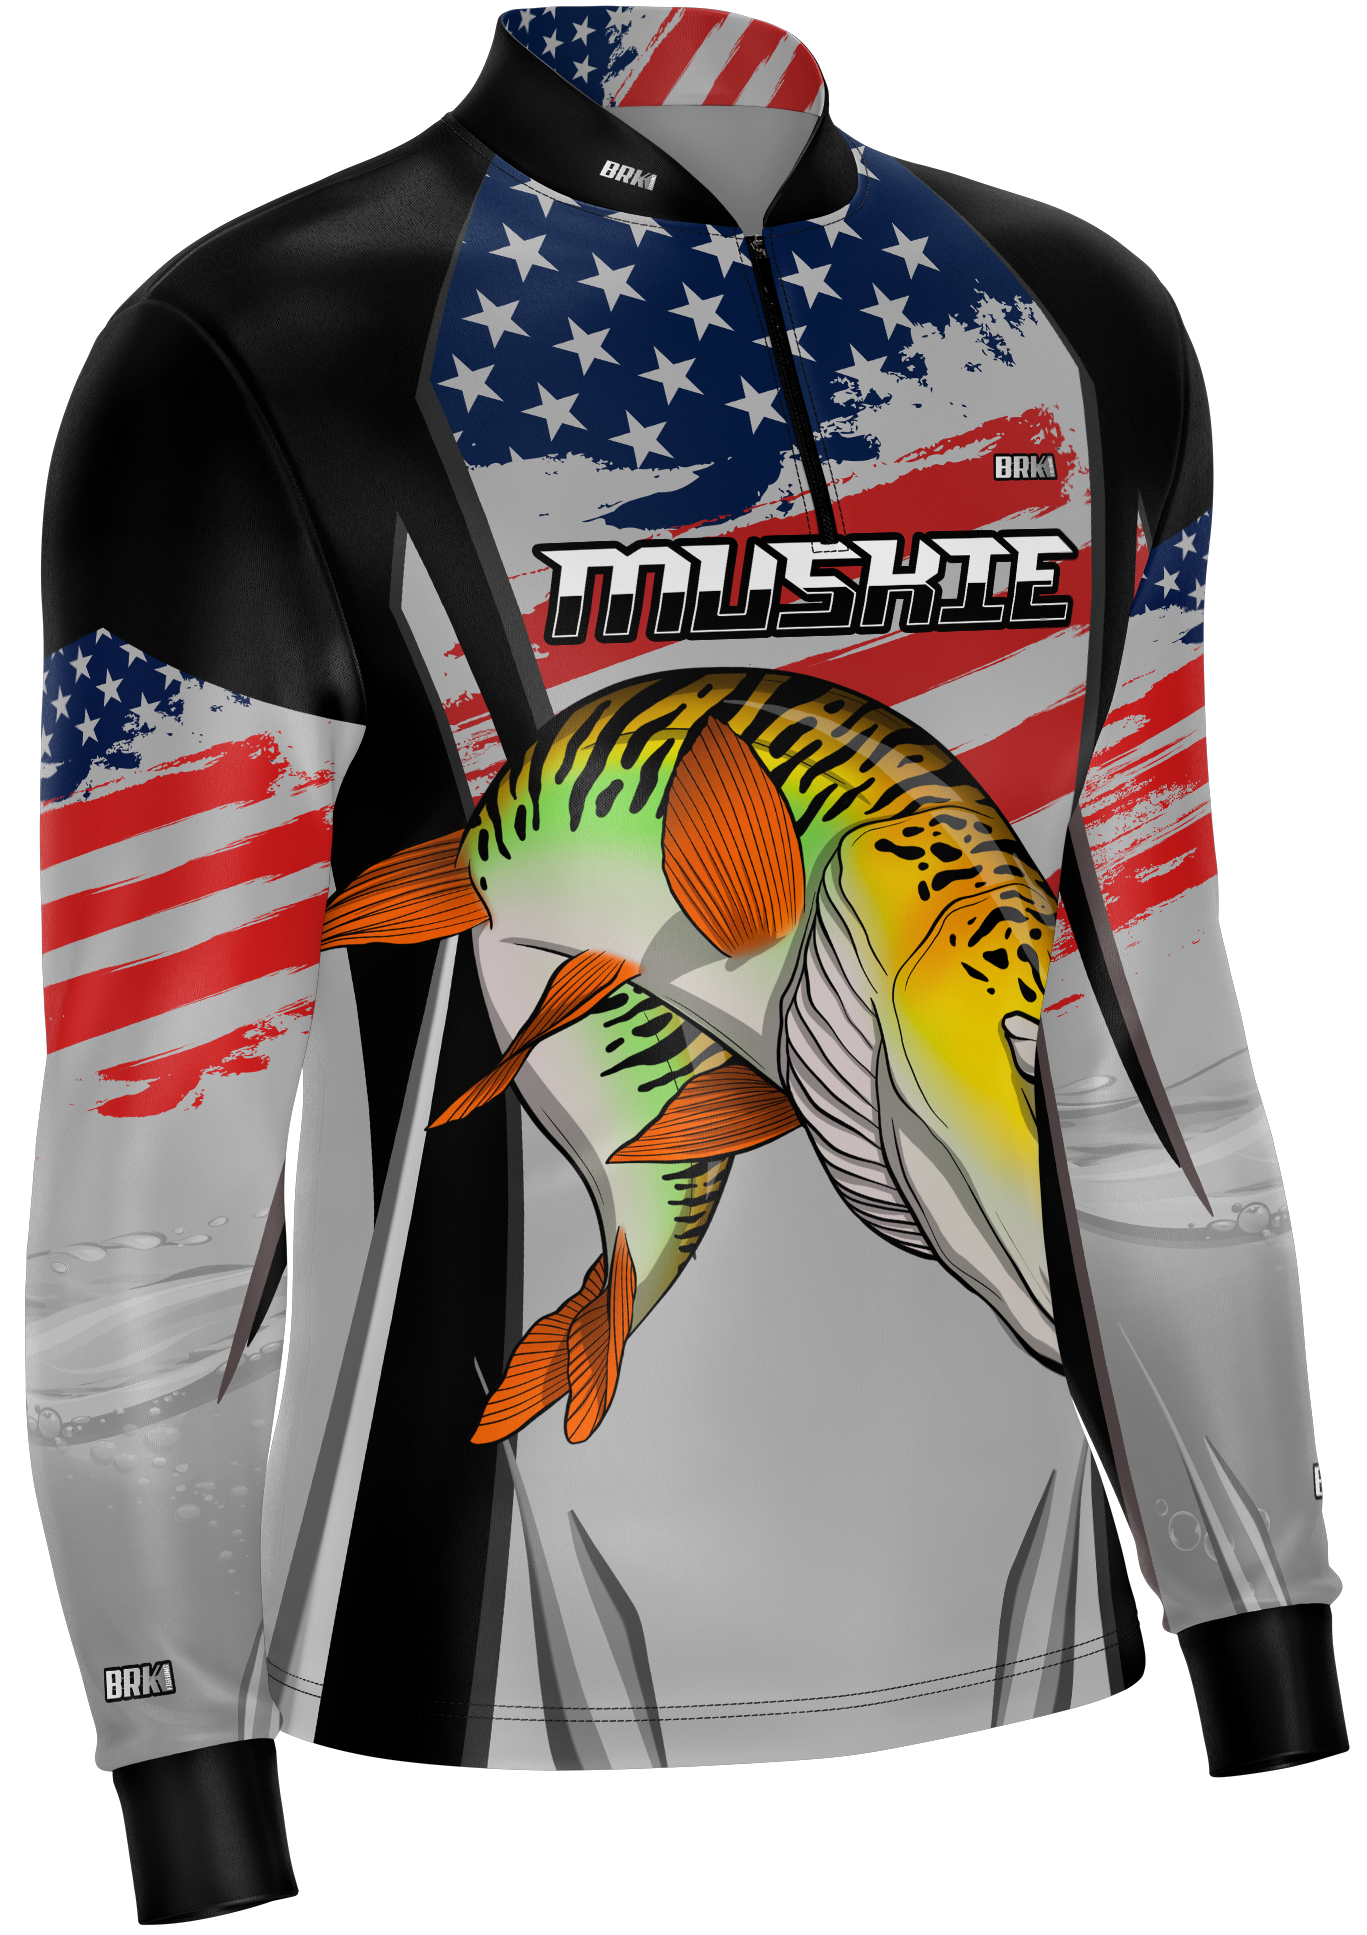 Brk Men’s Long Sleeve Fishing Shirt American Muskie Black UPF 30+ Sun Protection